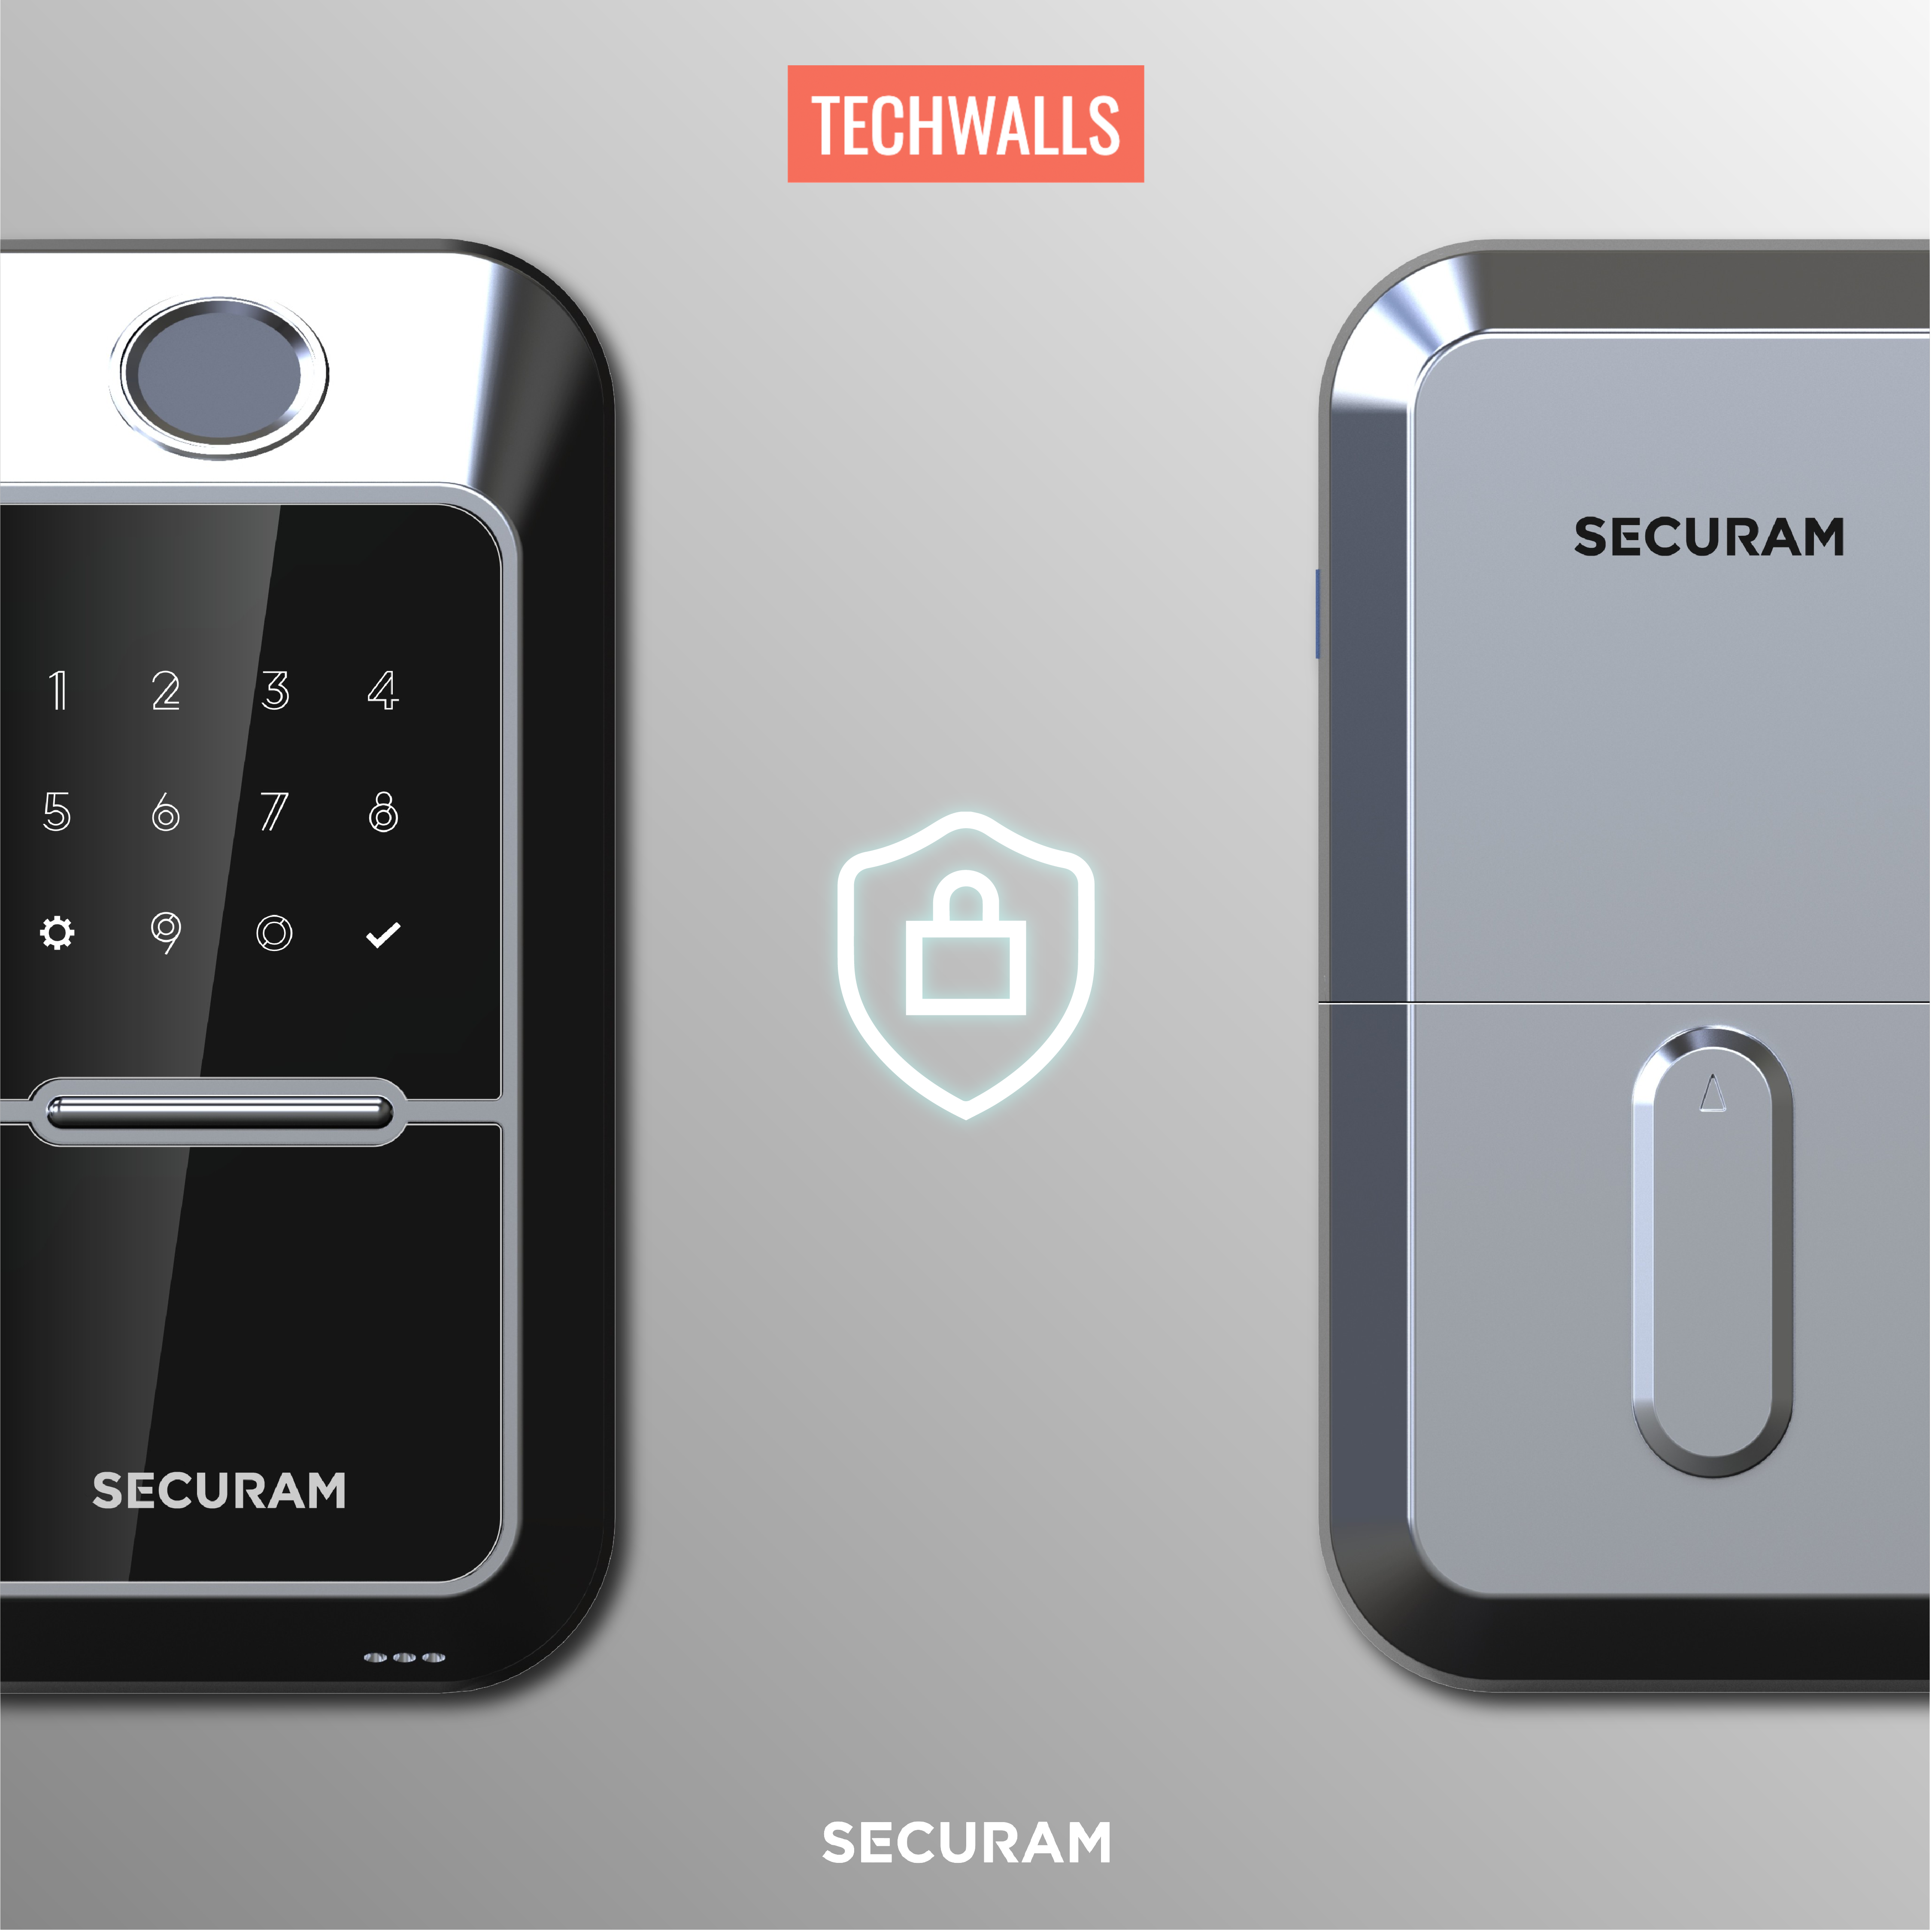 SECURAM EOS Fingerprint Smart Lock Review – Is It Better than SECURAM Touch?